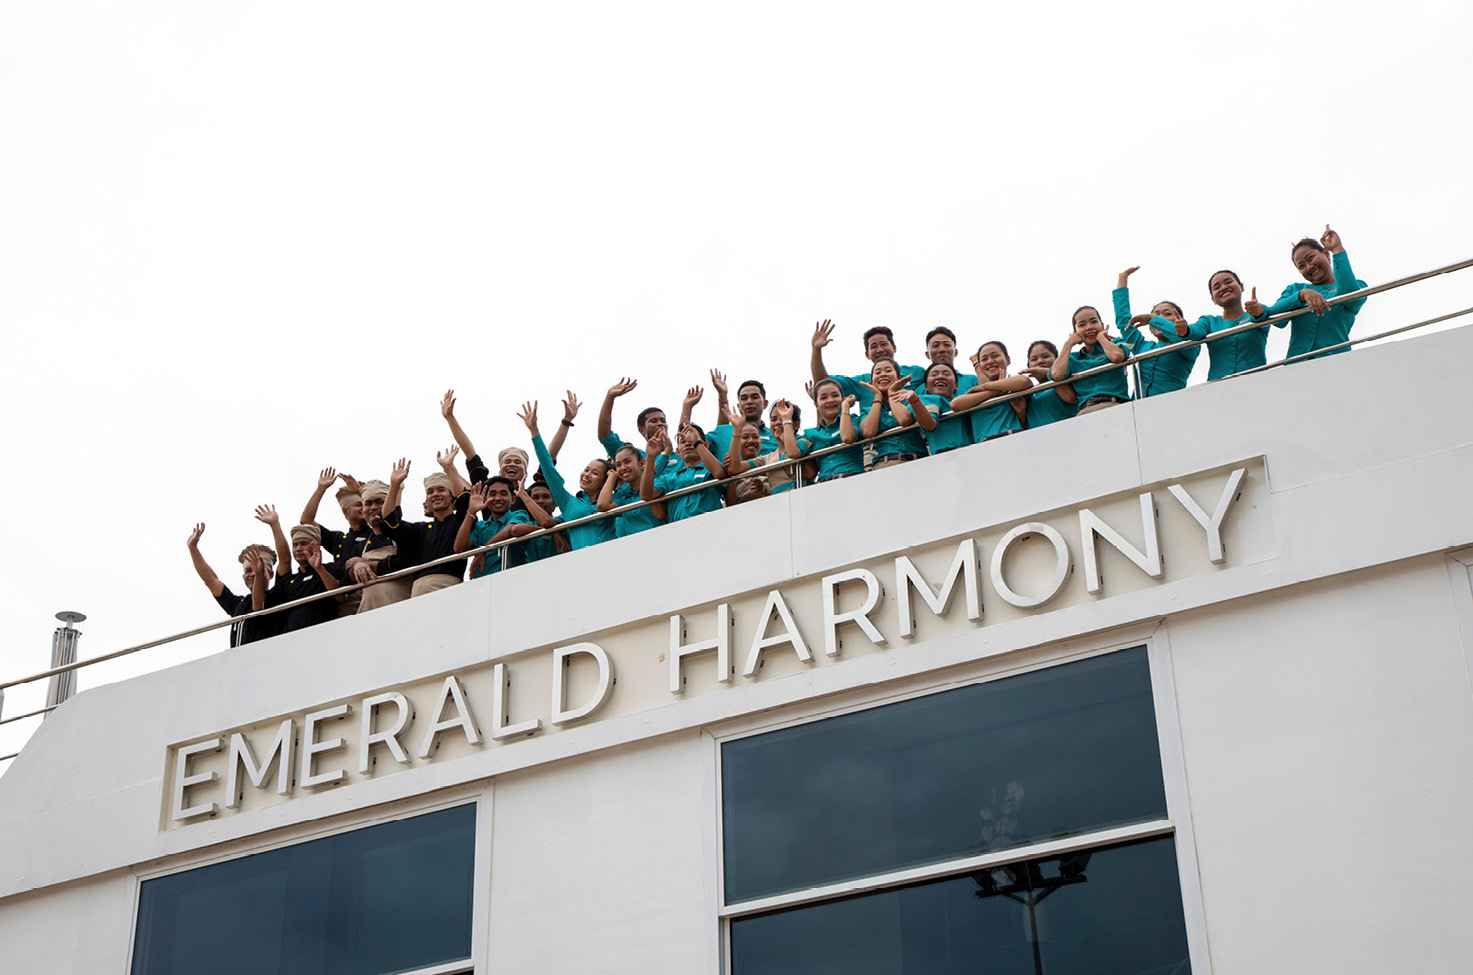 The crew on board Emerald Harmony, a luxury river cruise ship sailing Southeast Asia